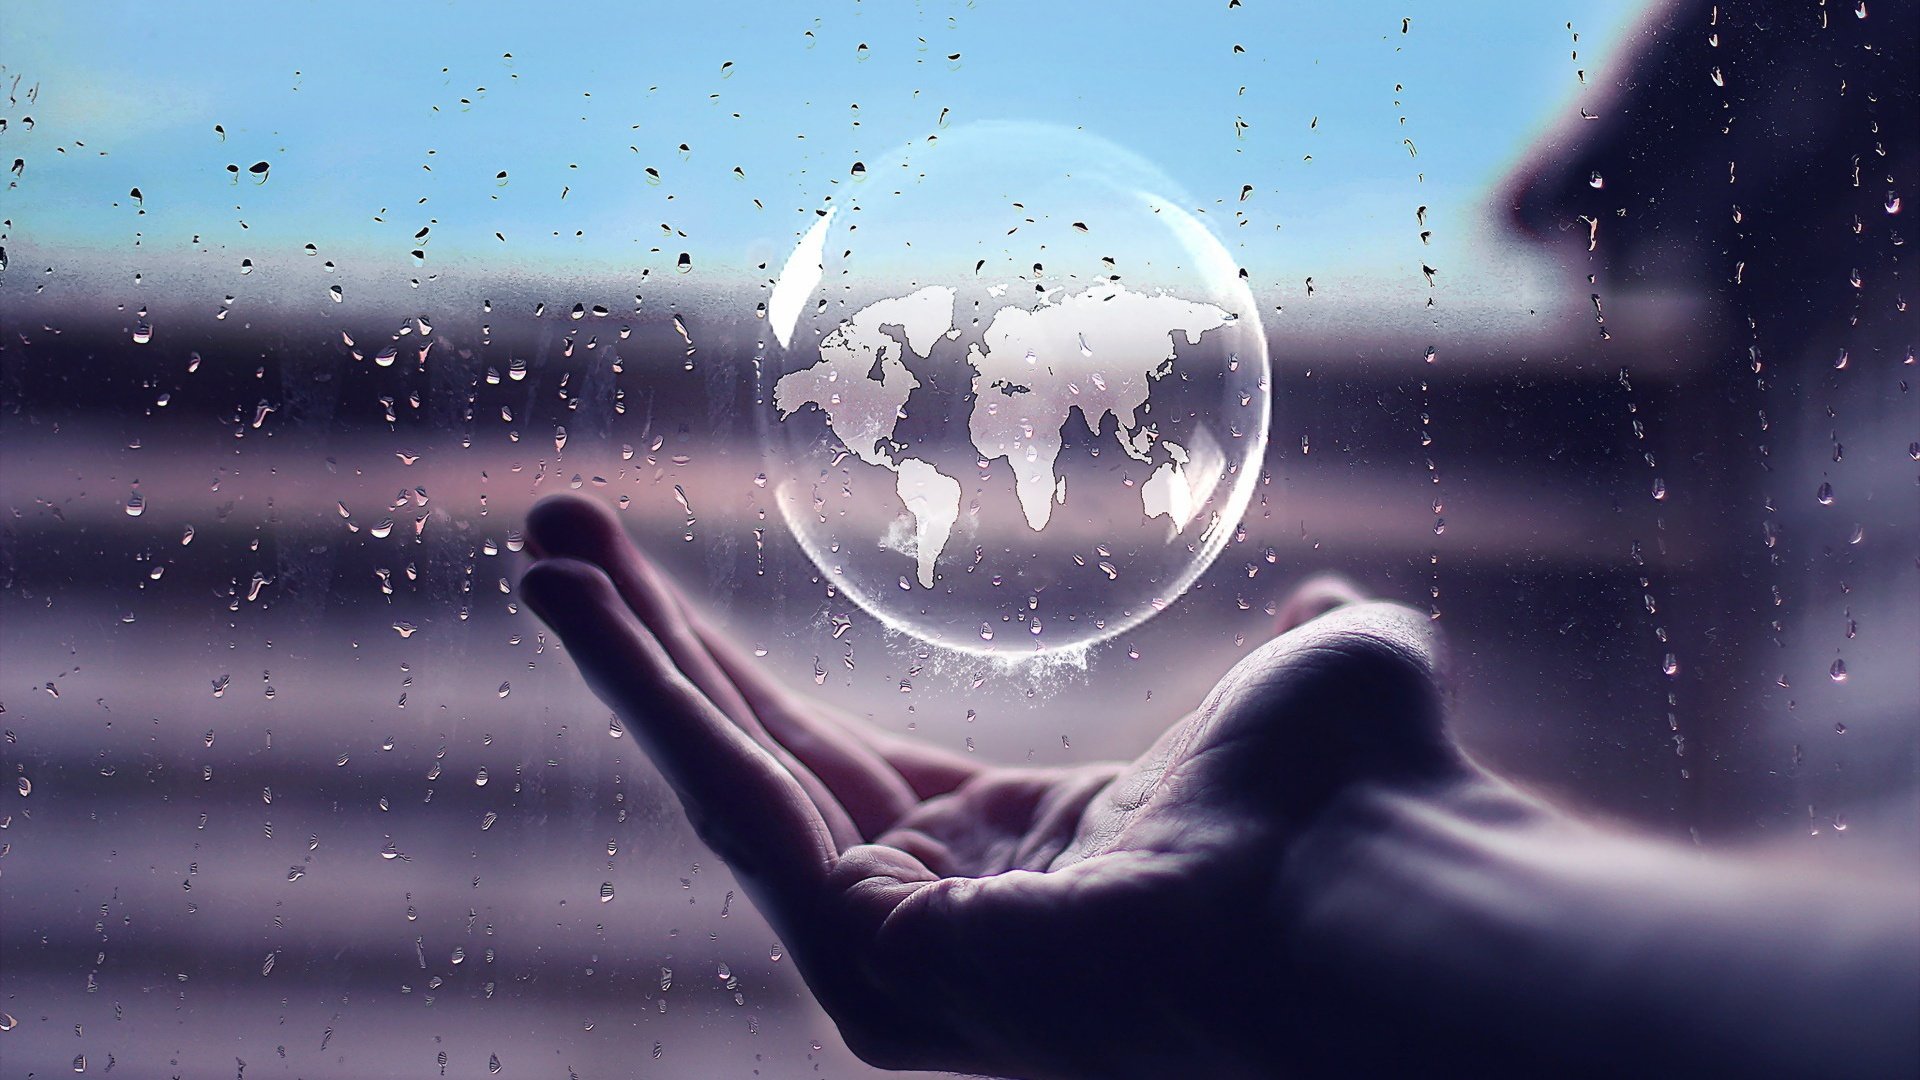 HANDS___world_sphere_rain_transparencse_1920x1080